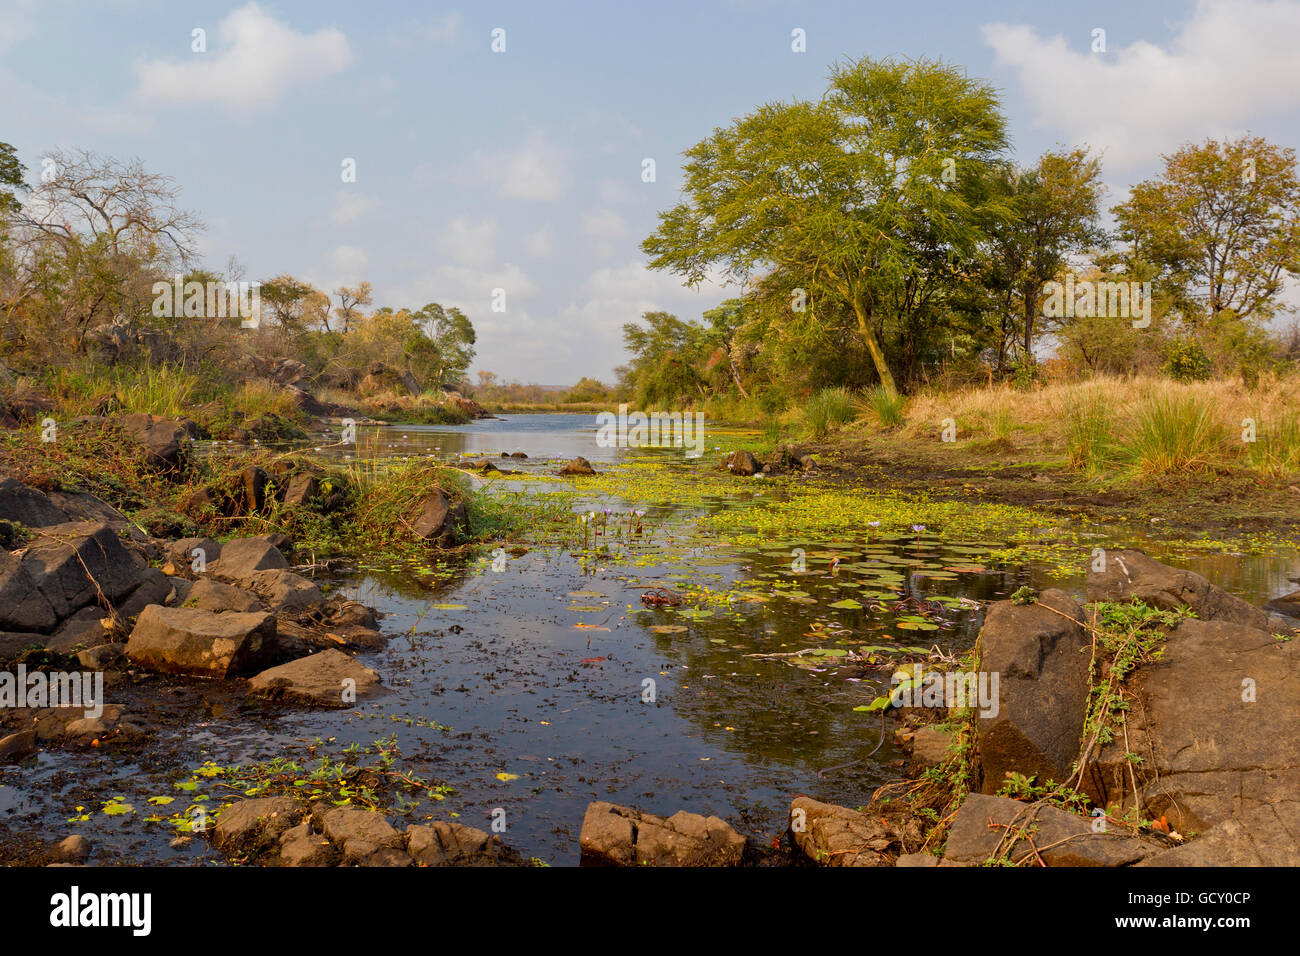 Паустовский река из реки лимпопо. Зимбабве река Лимпопо. Национальный парк Лимпопо Мозамбик. Река Луженда Мозамбик фото.